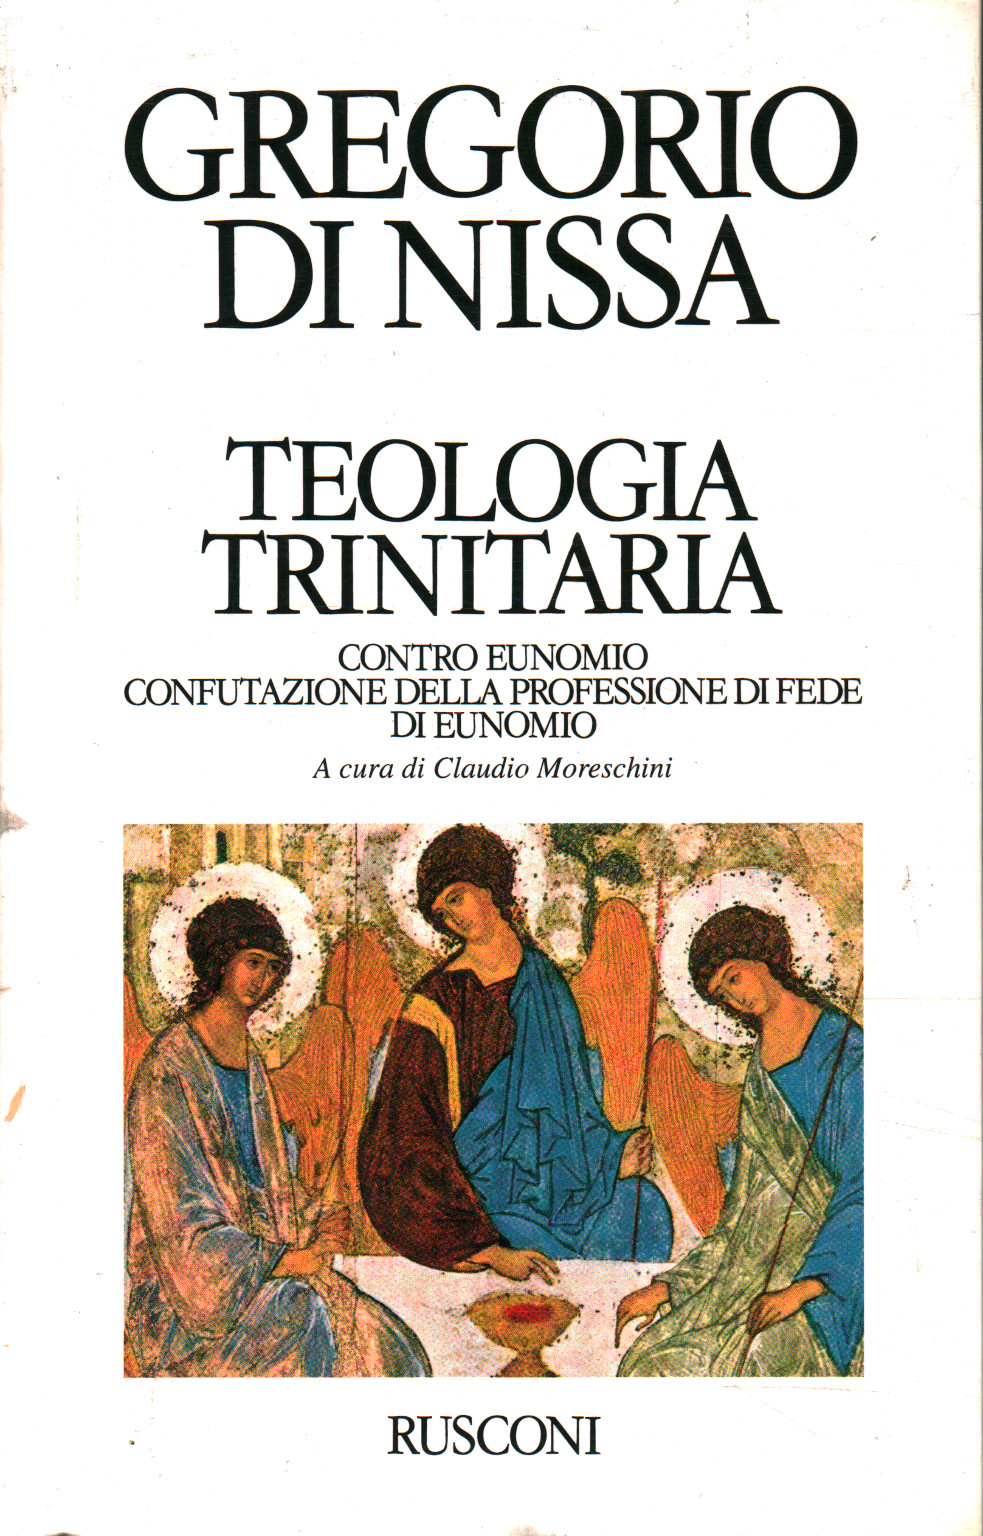 Trinitarian theology. Against Eunomio. Rebuttal, Gregorio Di Nissa